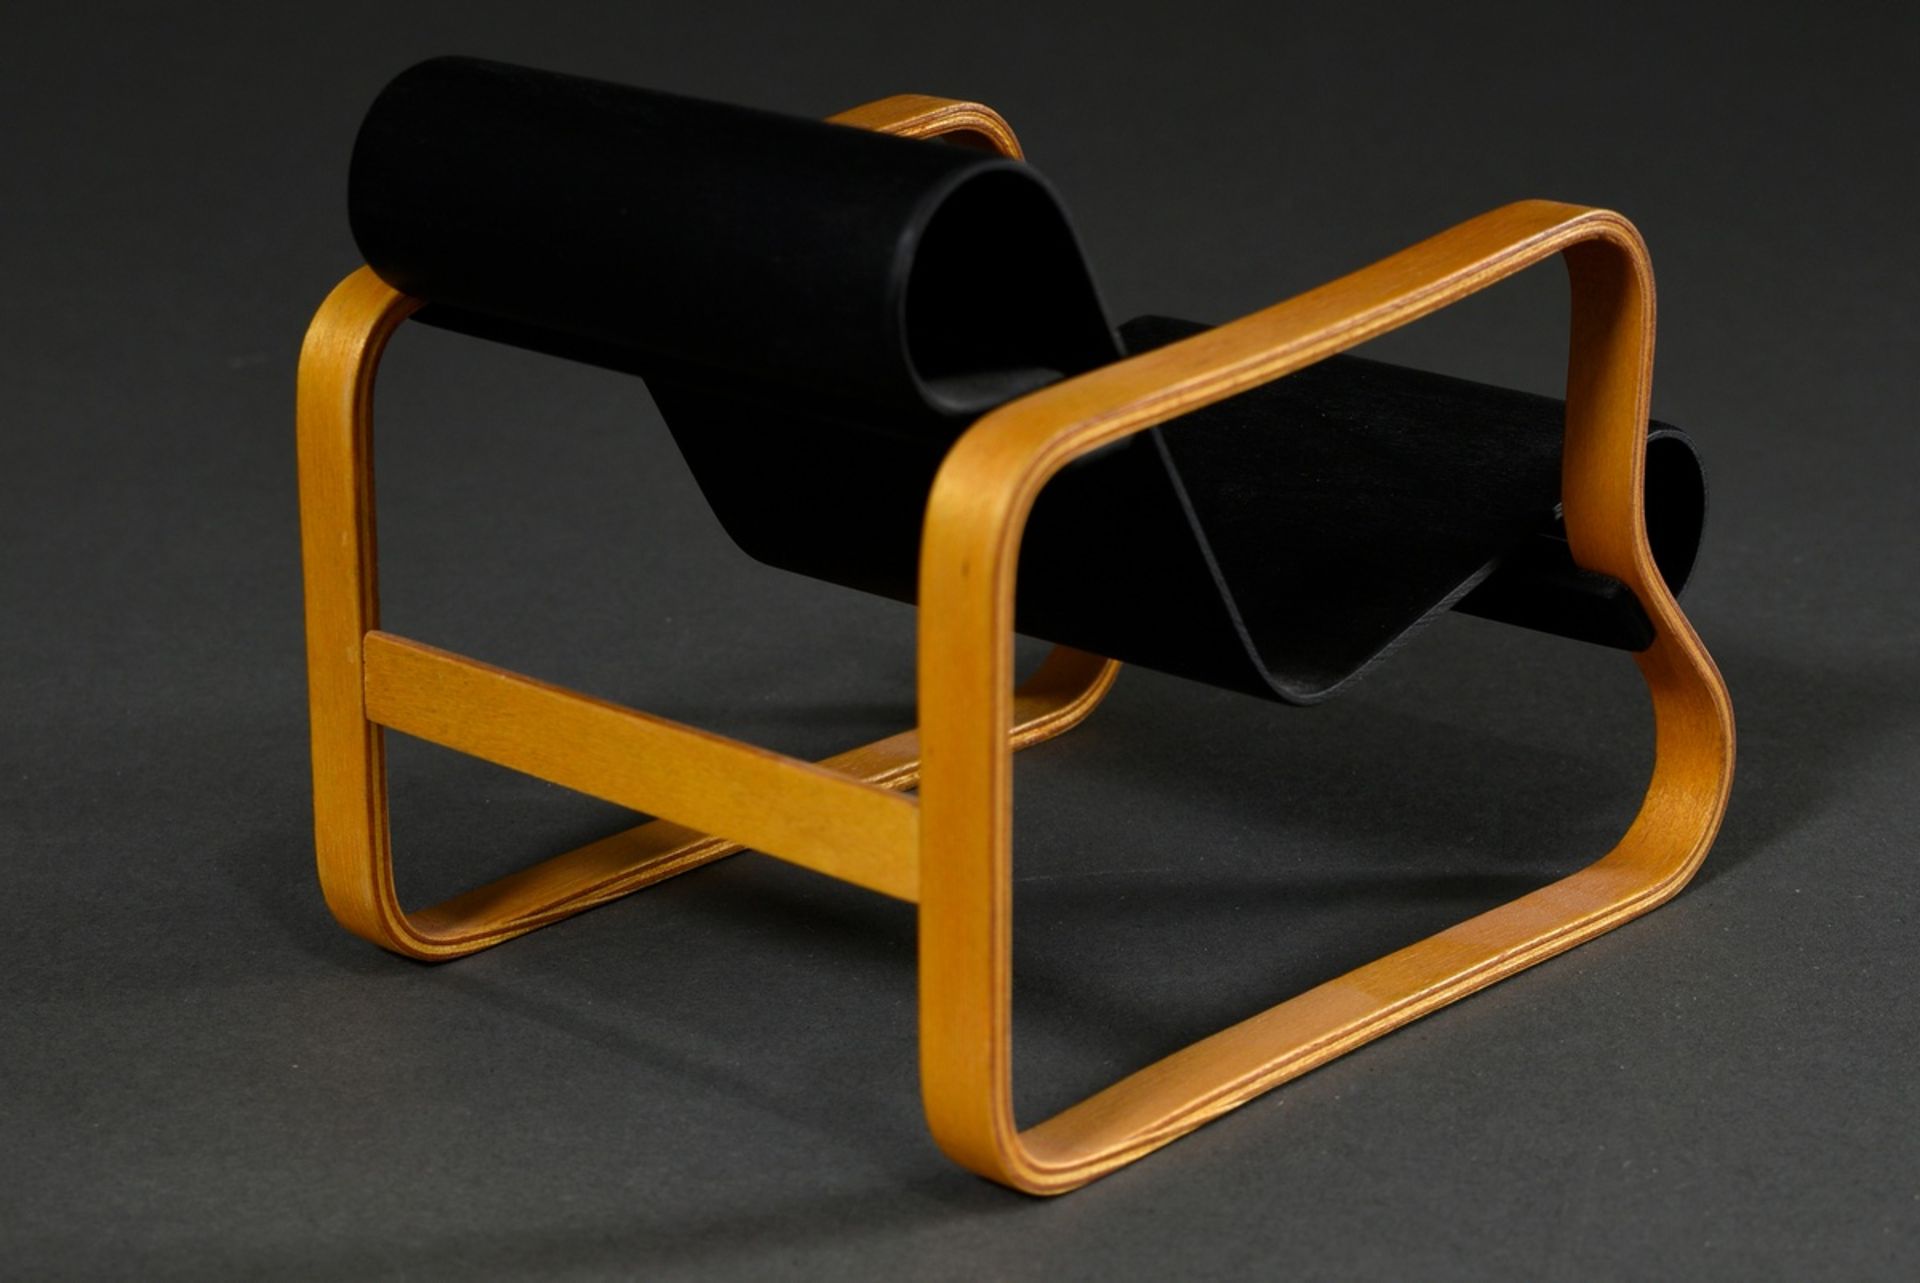 Miniature model armchair "No. 41 Paimio", design: Alvar Aalto 1930, plywood, lacquered, Vitra Desig - Image 3 of 4